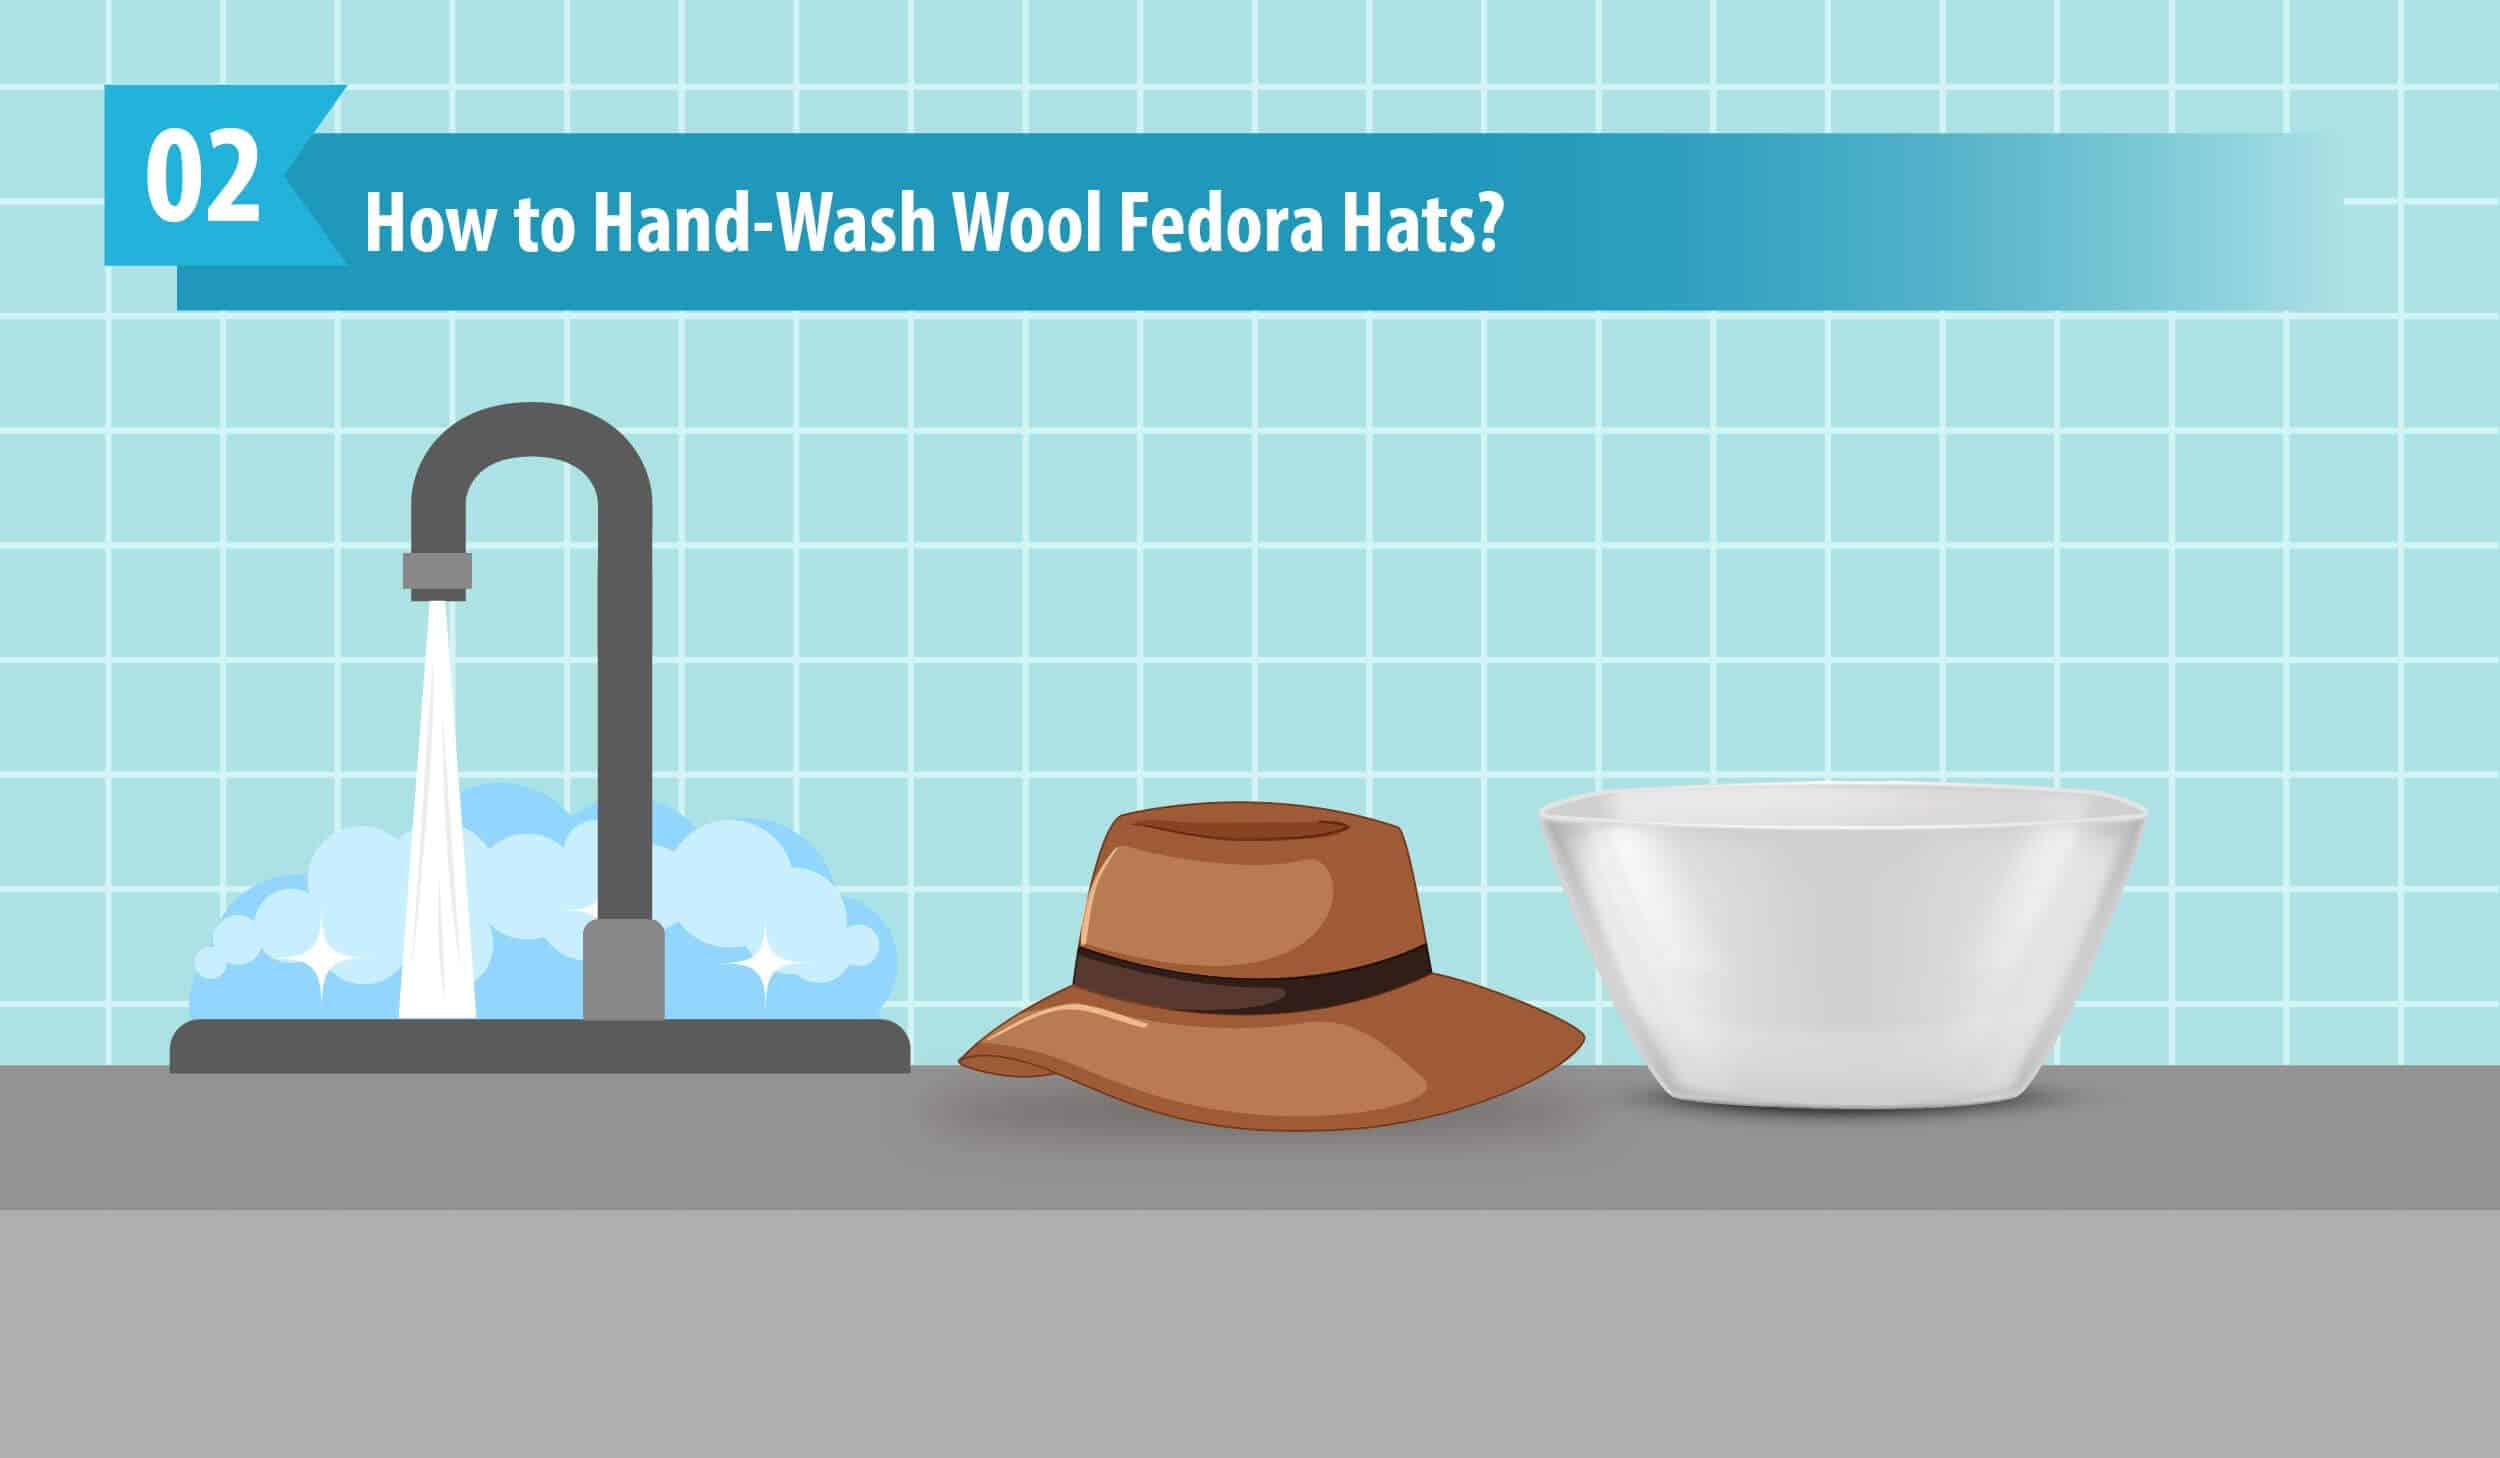 How to Hand-Wash Wool Fedora Hats